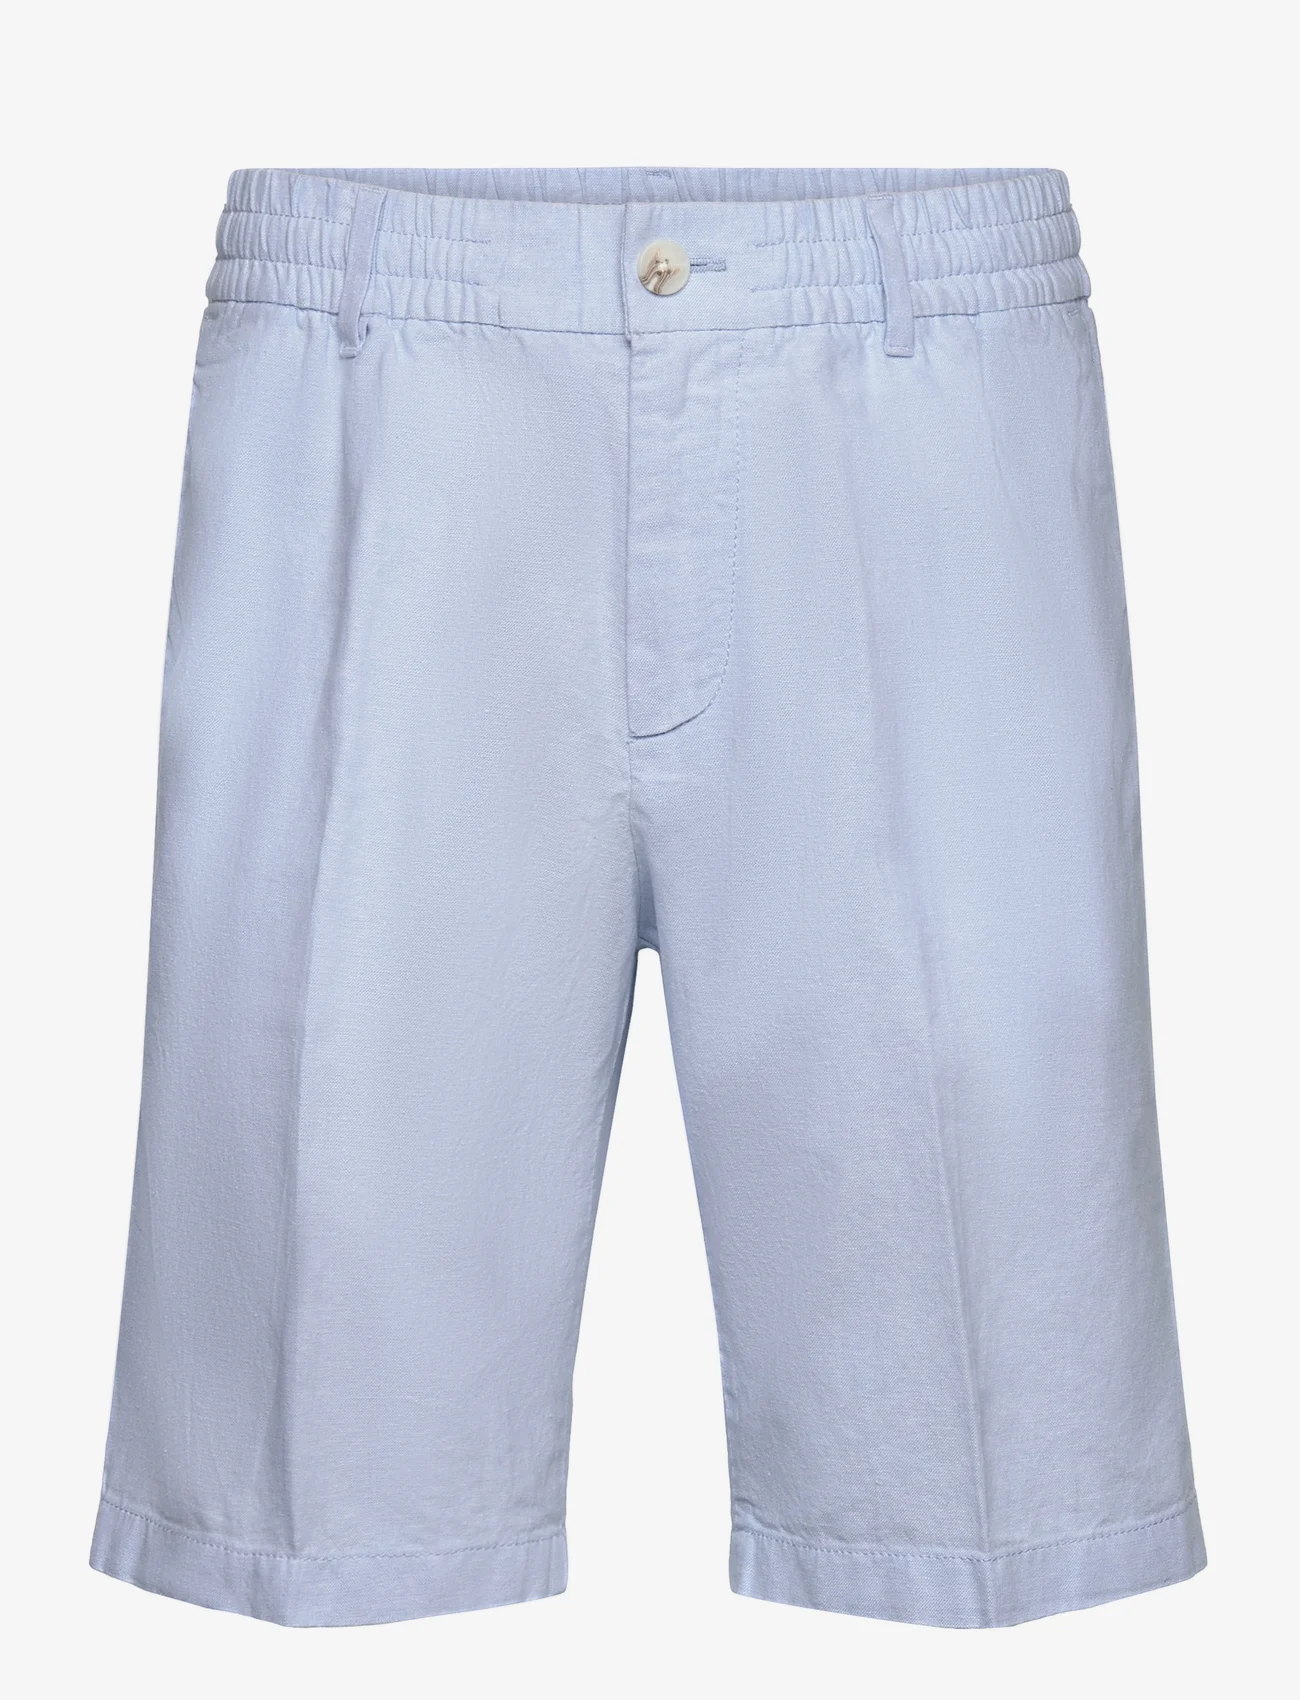 Tom Tailor - regular linen shorts - die niedrigsten preise - soft powder blue chambray - 0